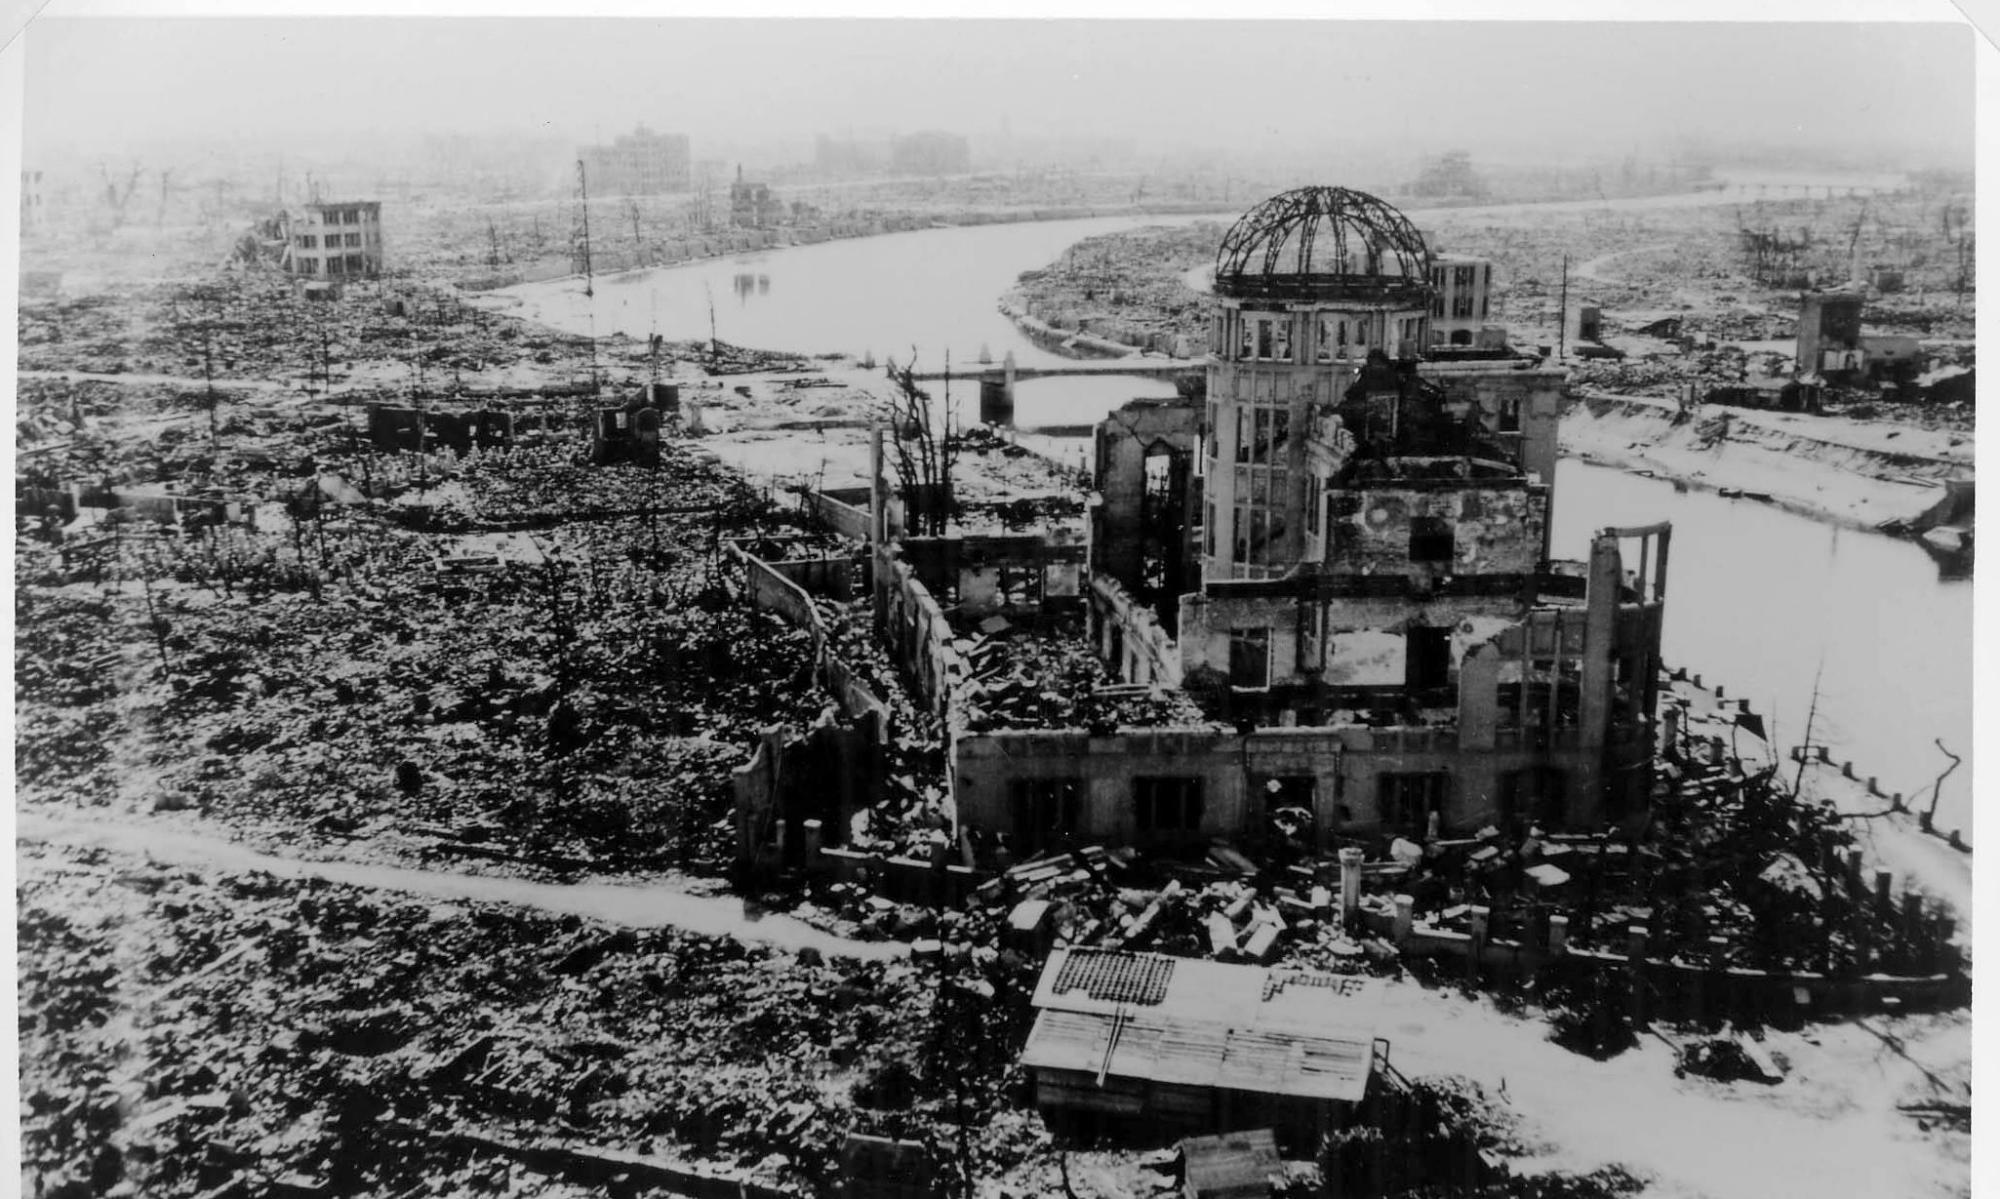 74th U.S. Atomic Bombing on Hiroshima – 6 August 1945